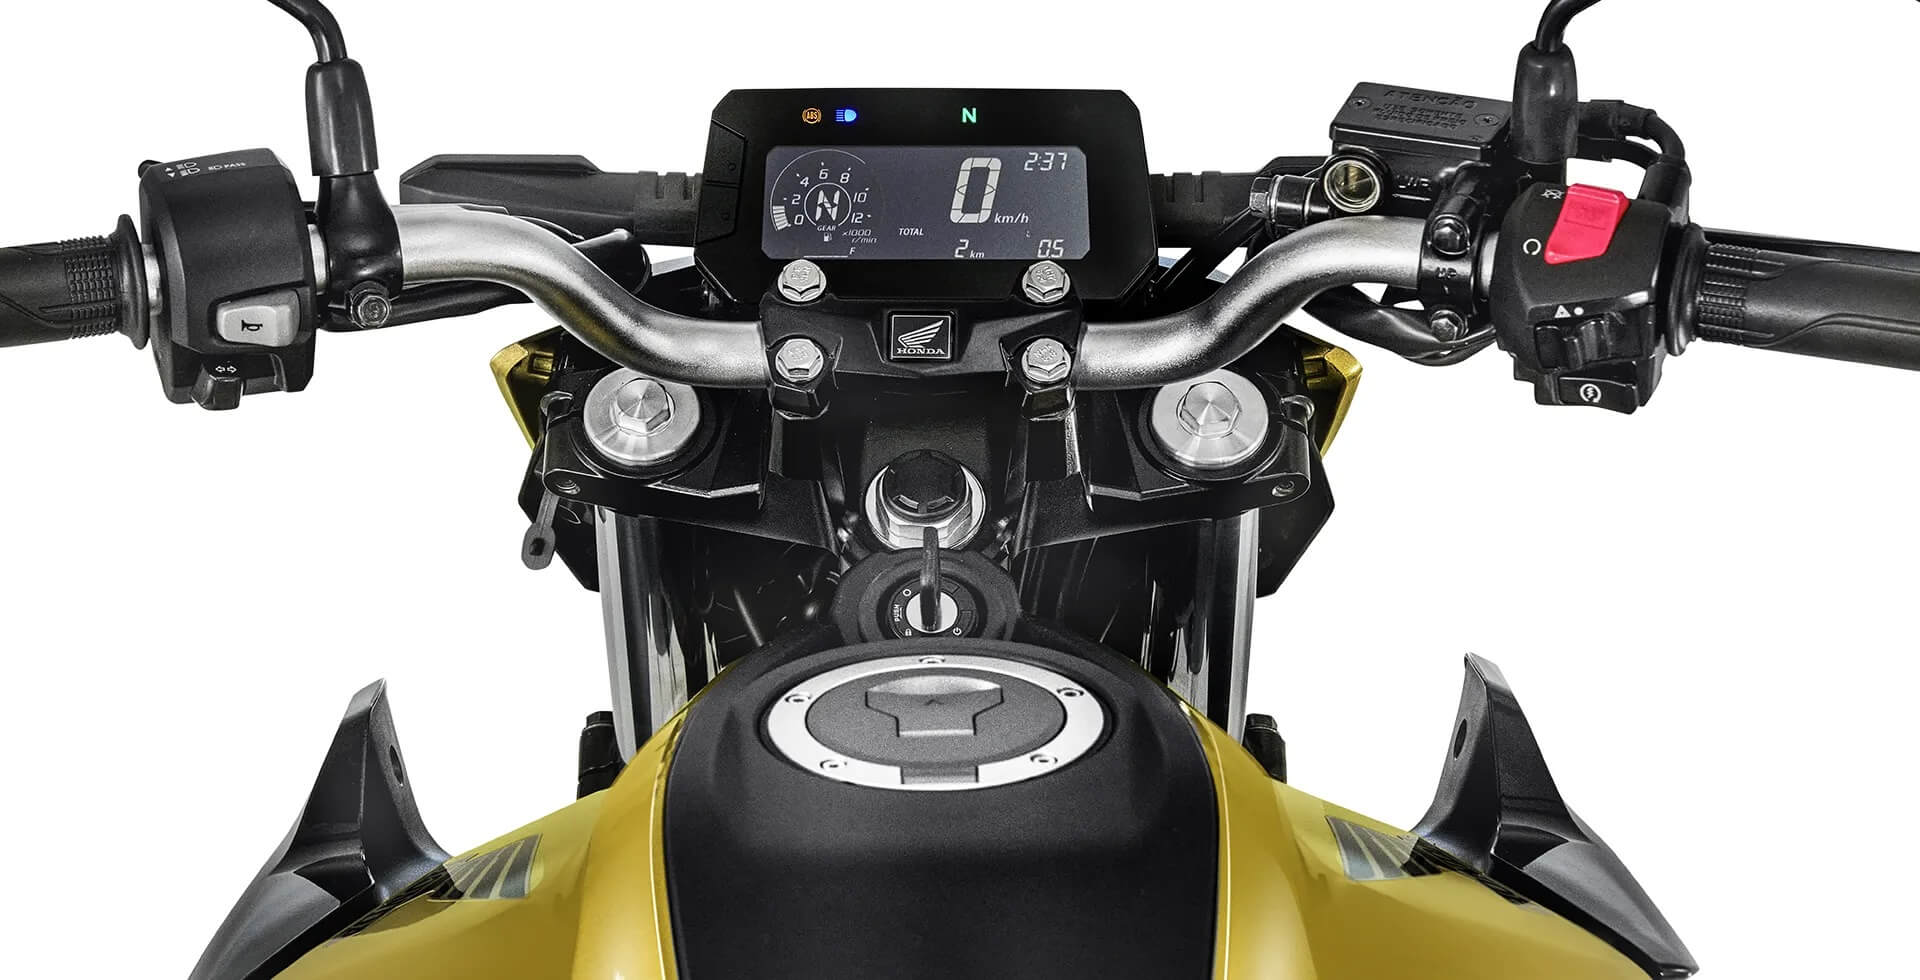 Moto Honda Twister Abs19/20 Zero Km Monte Leone Motos C/gar - Desenho de  raulggprozin - Gartic